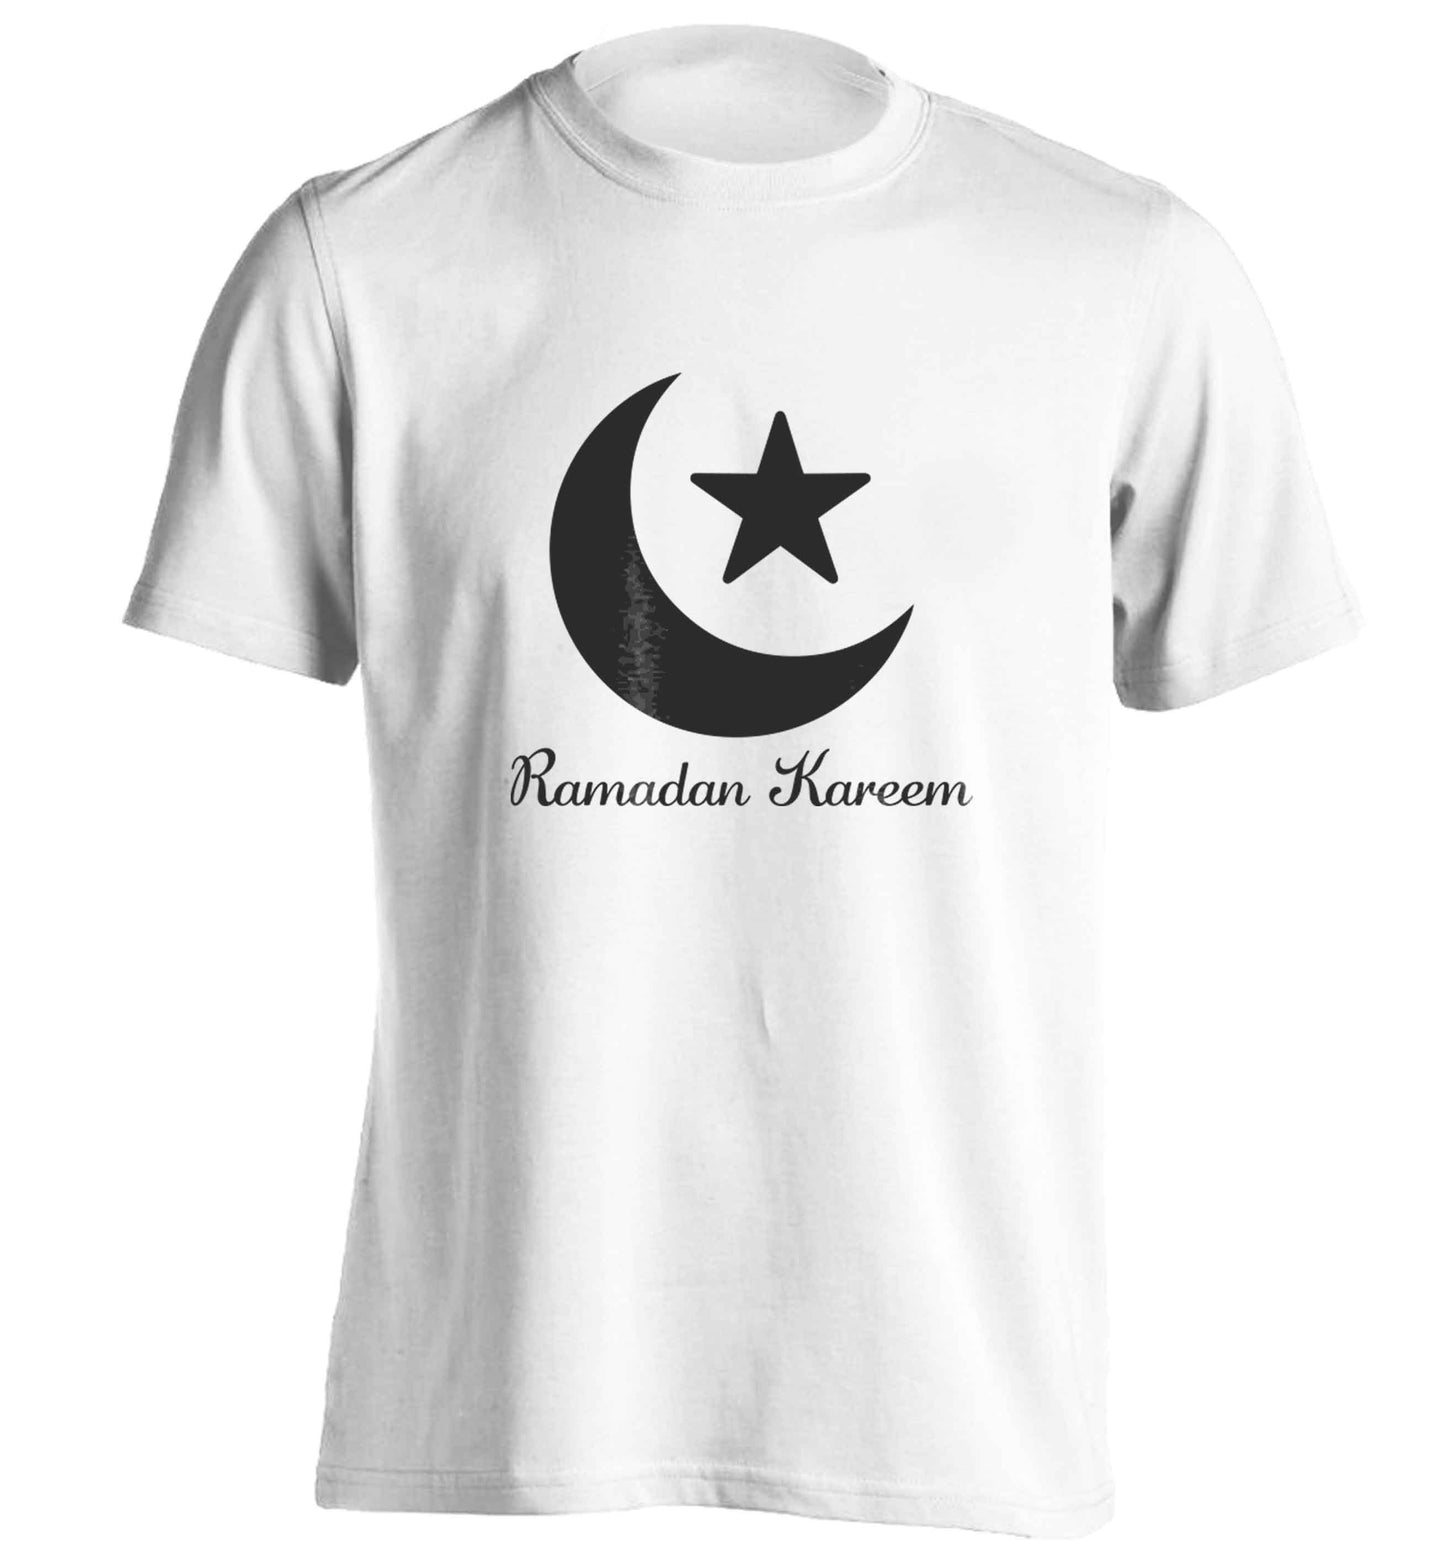 Ramadan kareem adults unisex white Tshirt 2XL